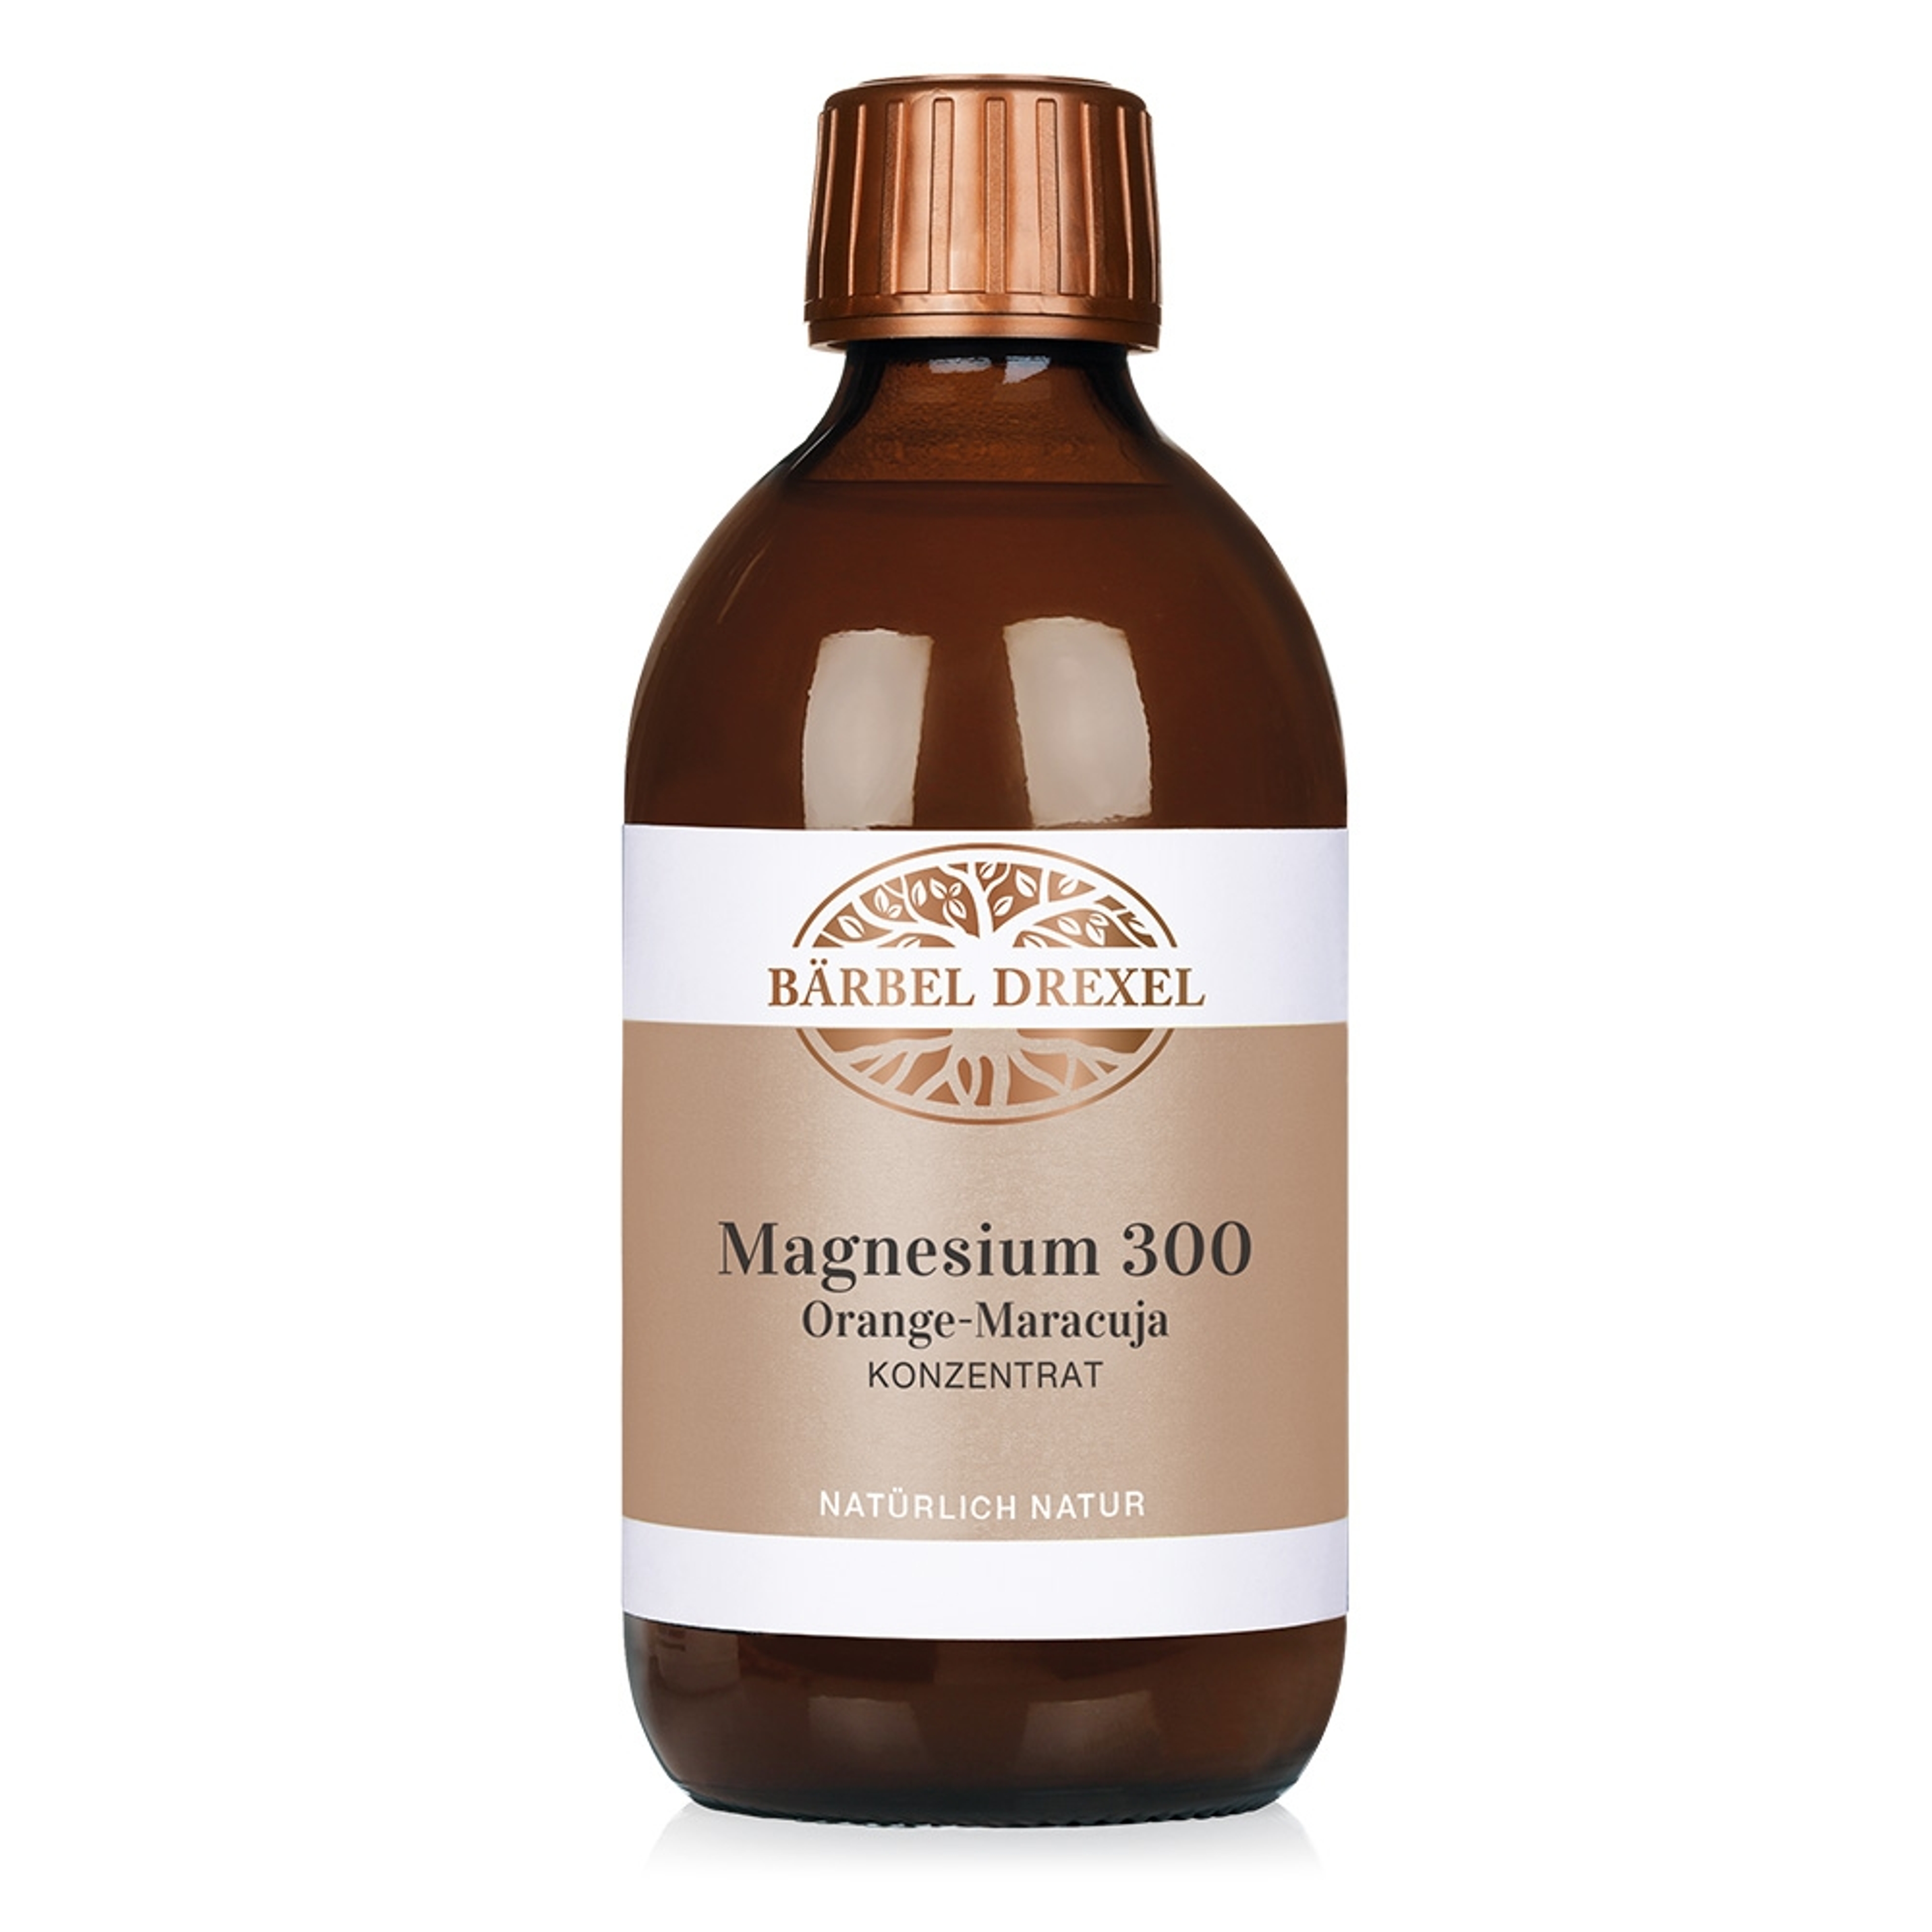 76913-magnesium-300-orange-maracuja-konzentrat-300ml_ohne-deko.jpg